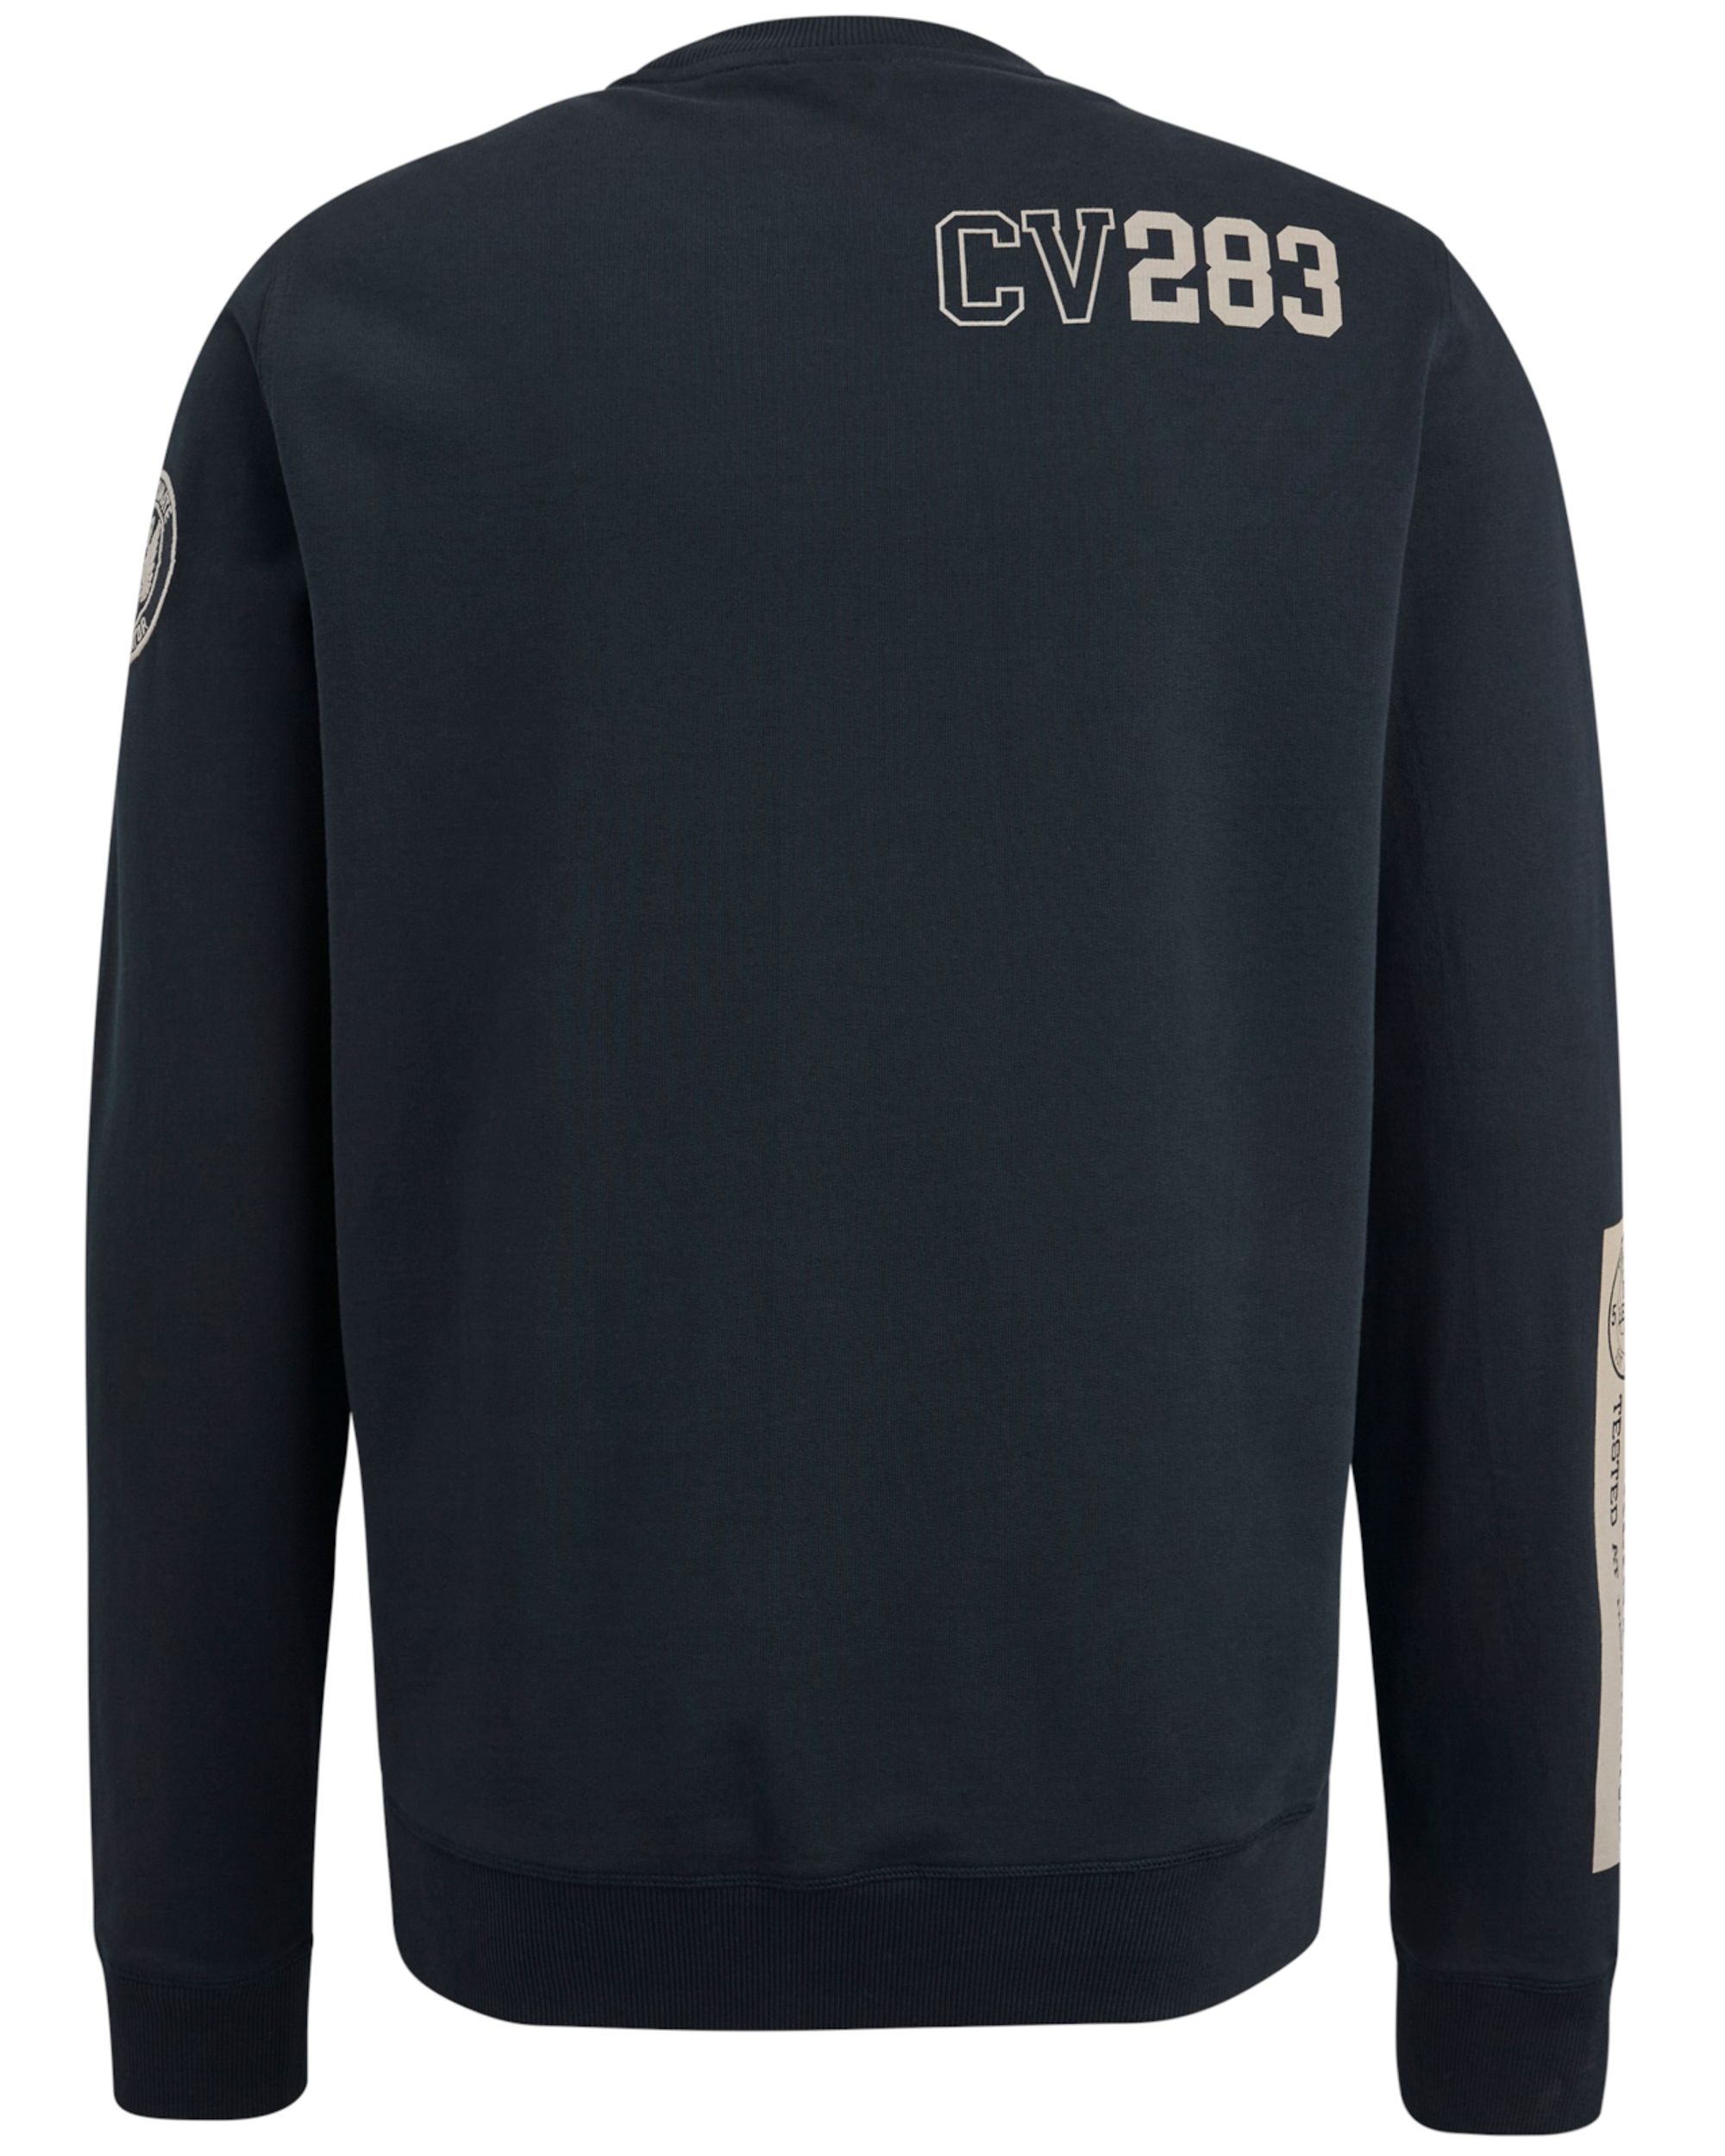 PME Legend Sweater Blauw 094852-001-L